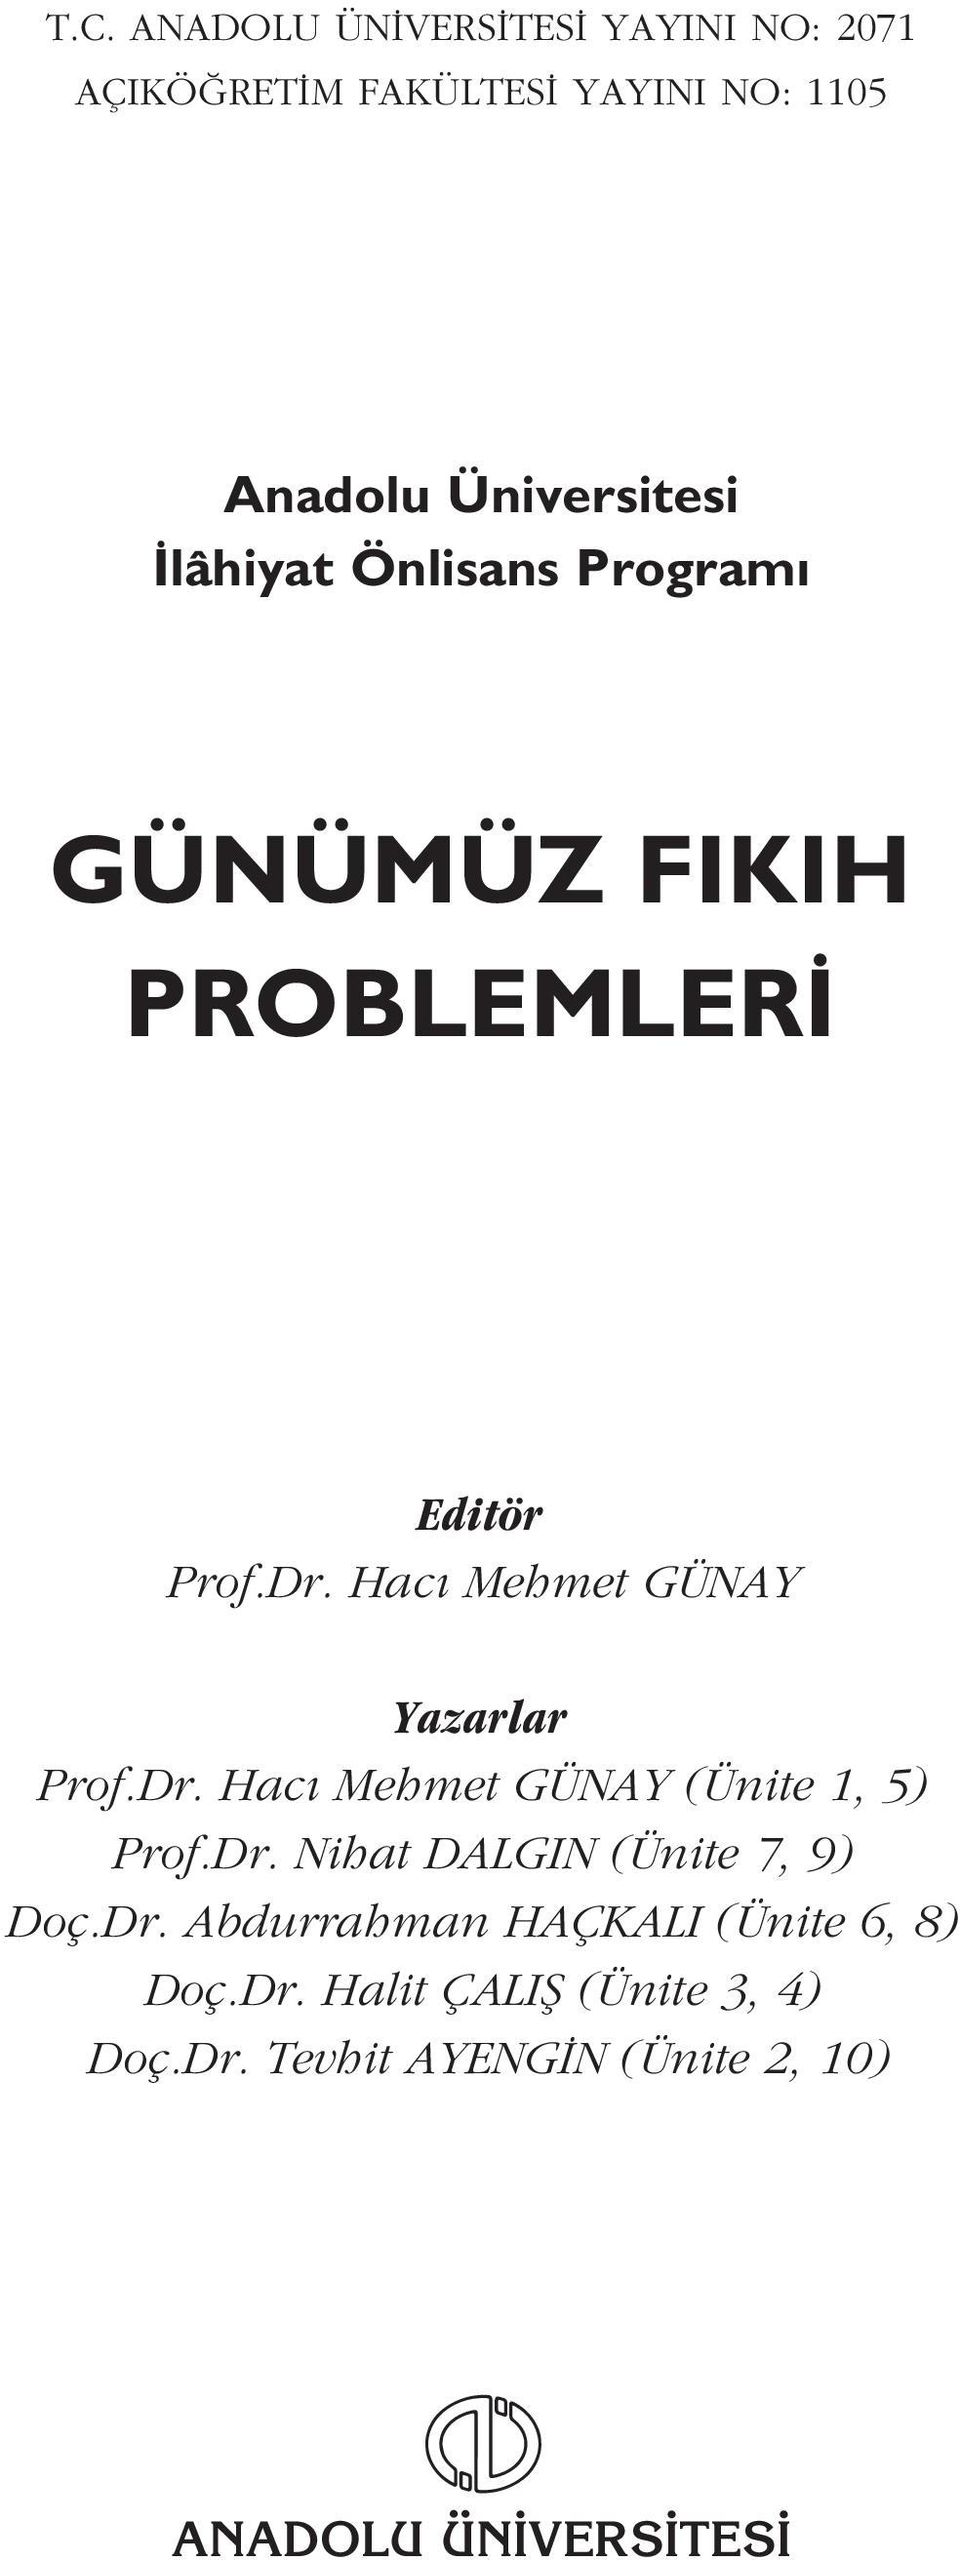 Dr. Hac Mehmet GÜNAY (Ünite 1, 5) Prof.Dr. Nihat DALGIN (Ünite 7, 9) Doç.Dr. Abdurrahman HAÇKALI (Ünite 6, 8) Doç.